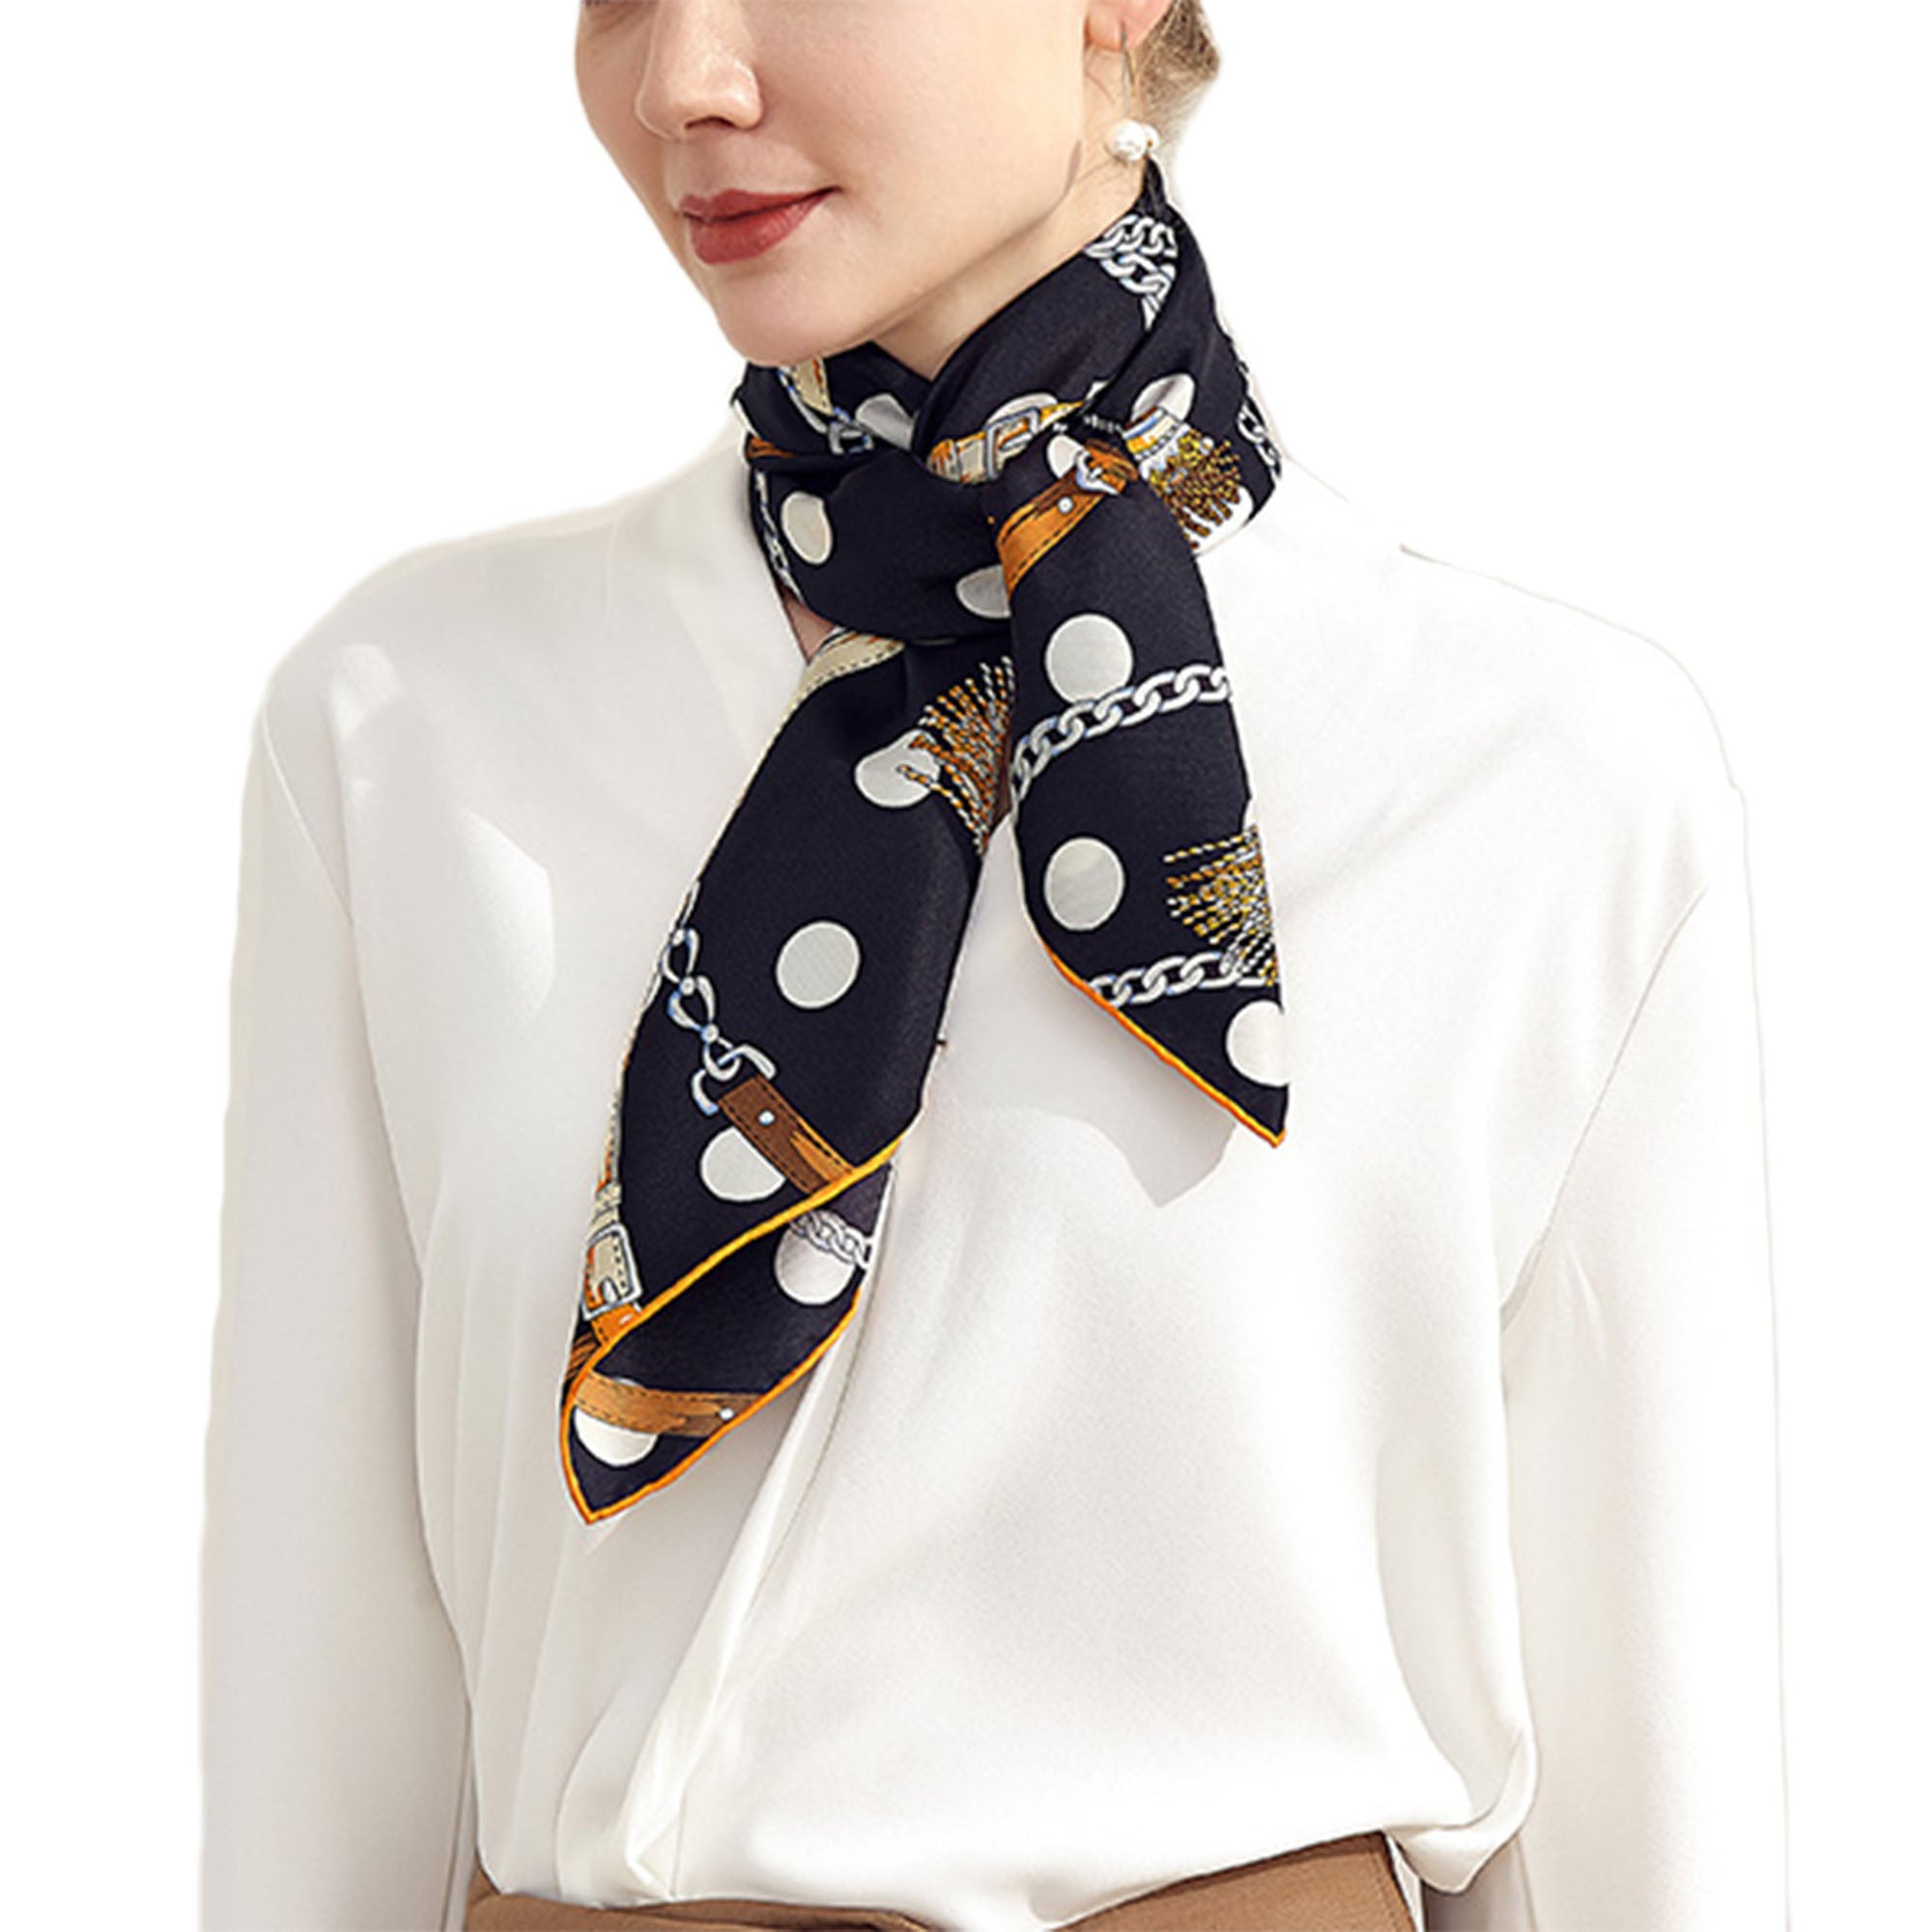 Bespoke printed silk scarf 90x90 cm (35x35) - Fibra Creativa